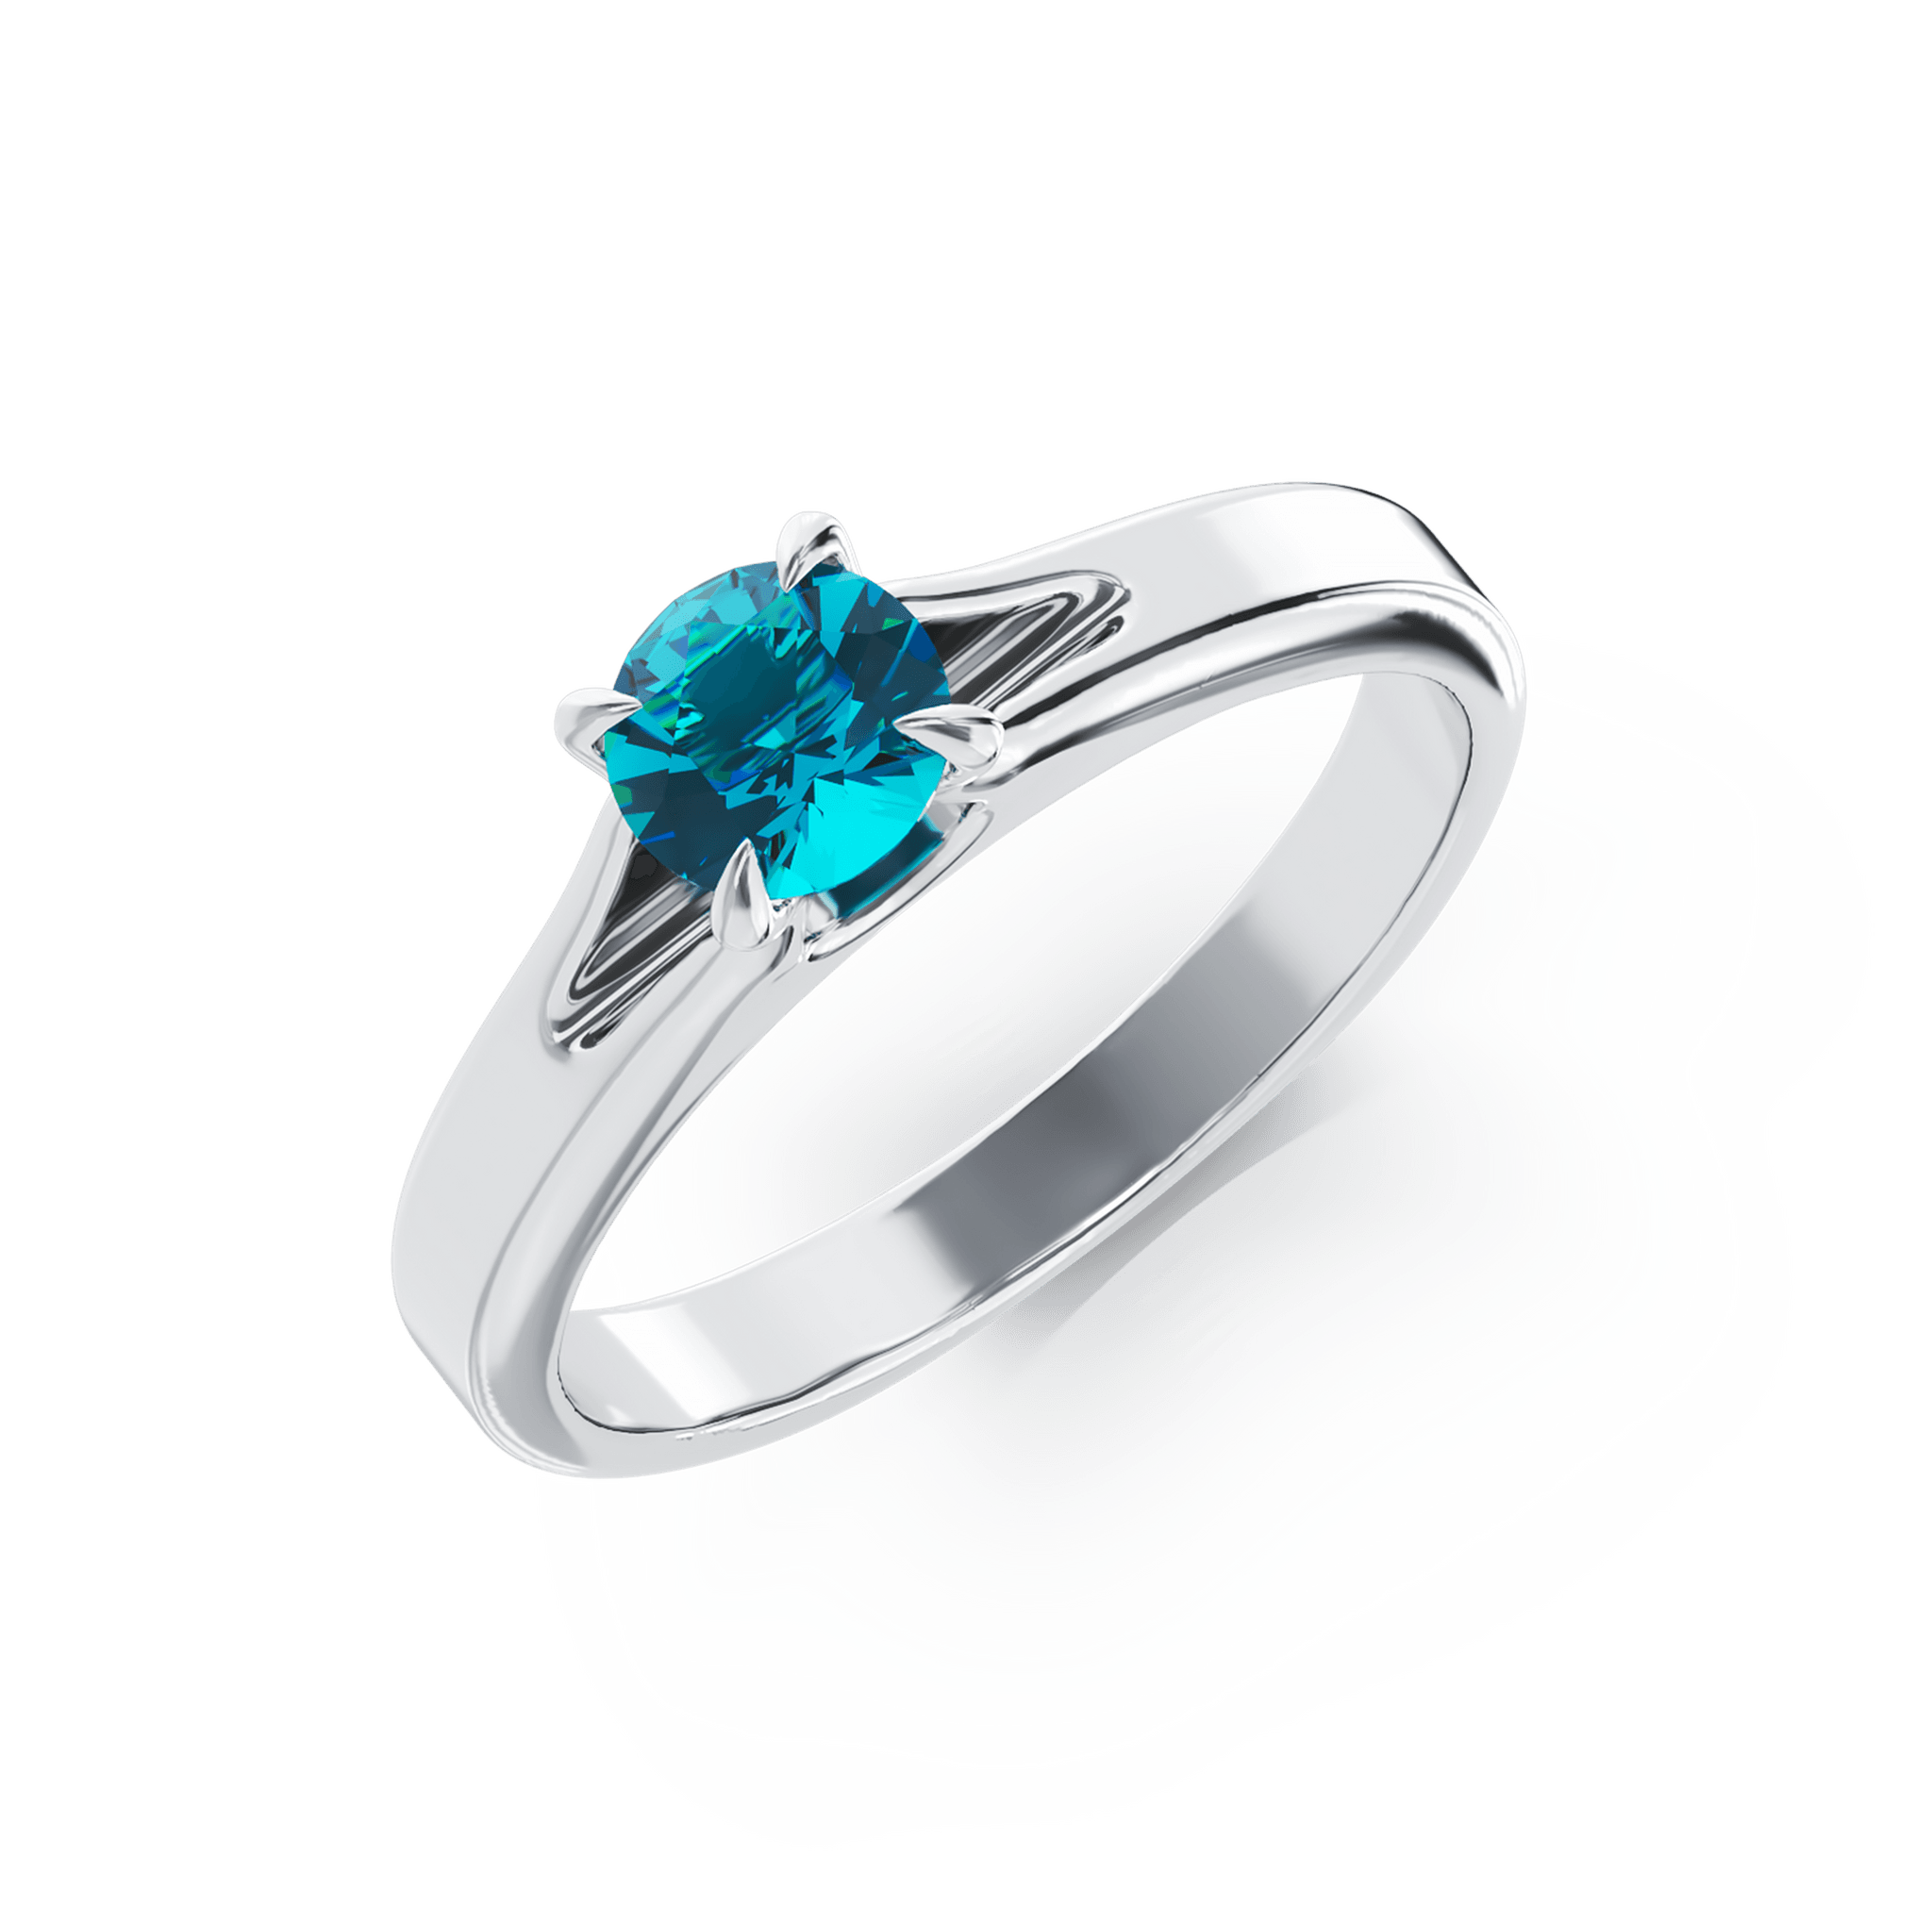 Inel de logodna din aur alb de 18K cu un diamant solitaire albastru de 0.33ct